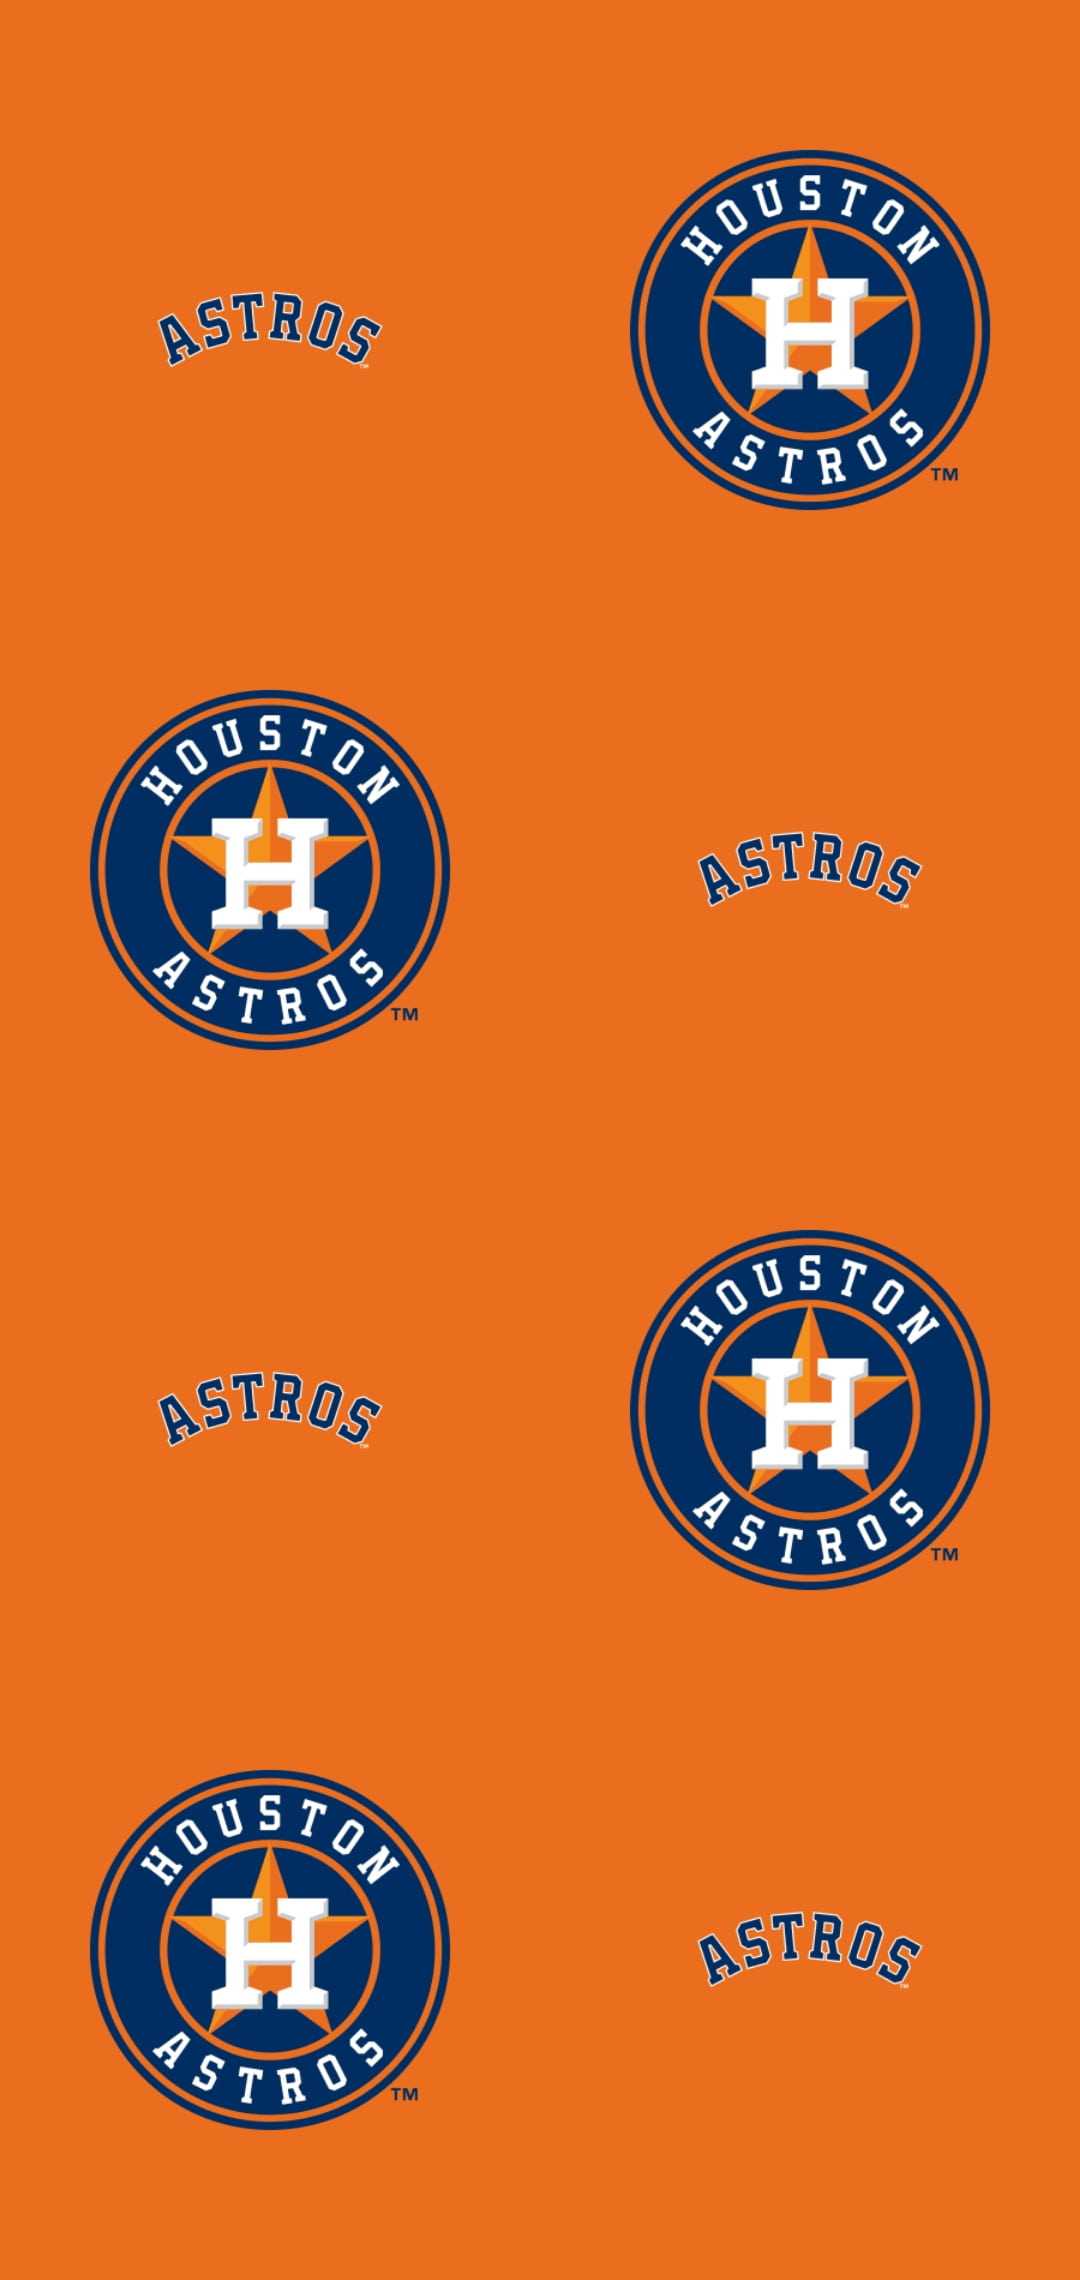 Astros Wallpaper - iXpap  Mlb wallpaper, Baseball wallpaper, Houston astros  baseball